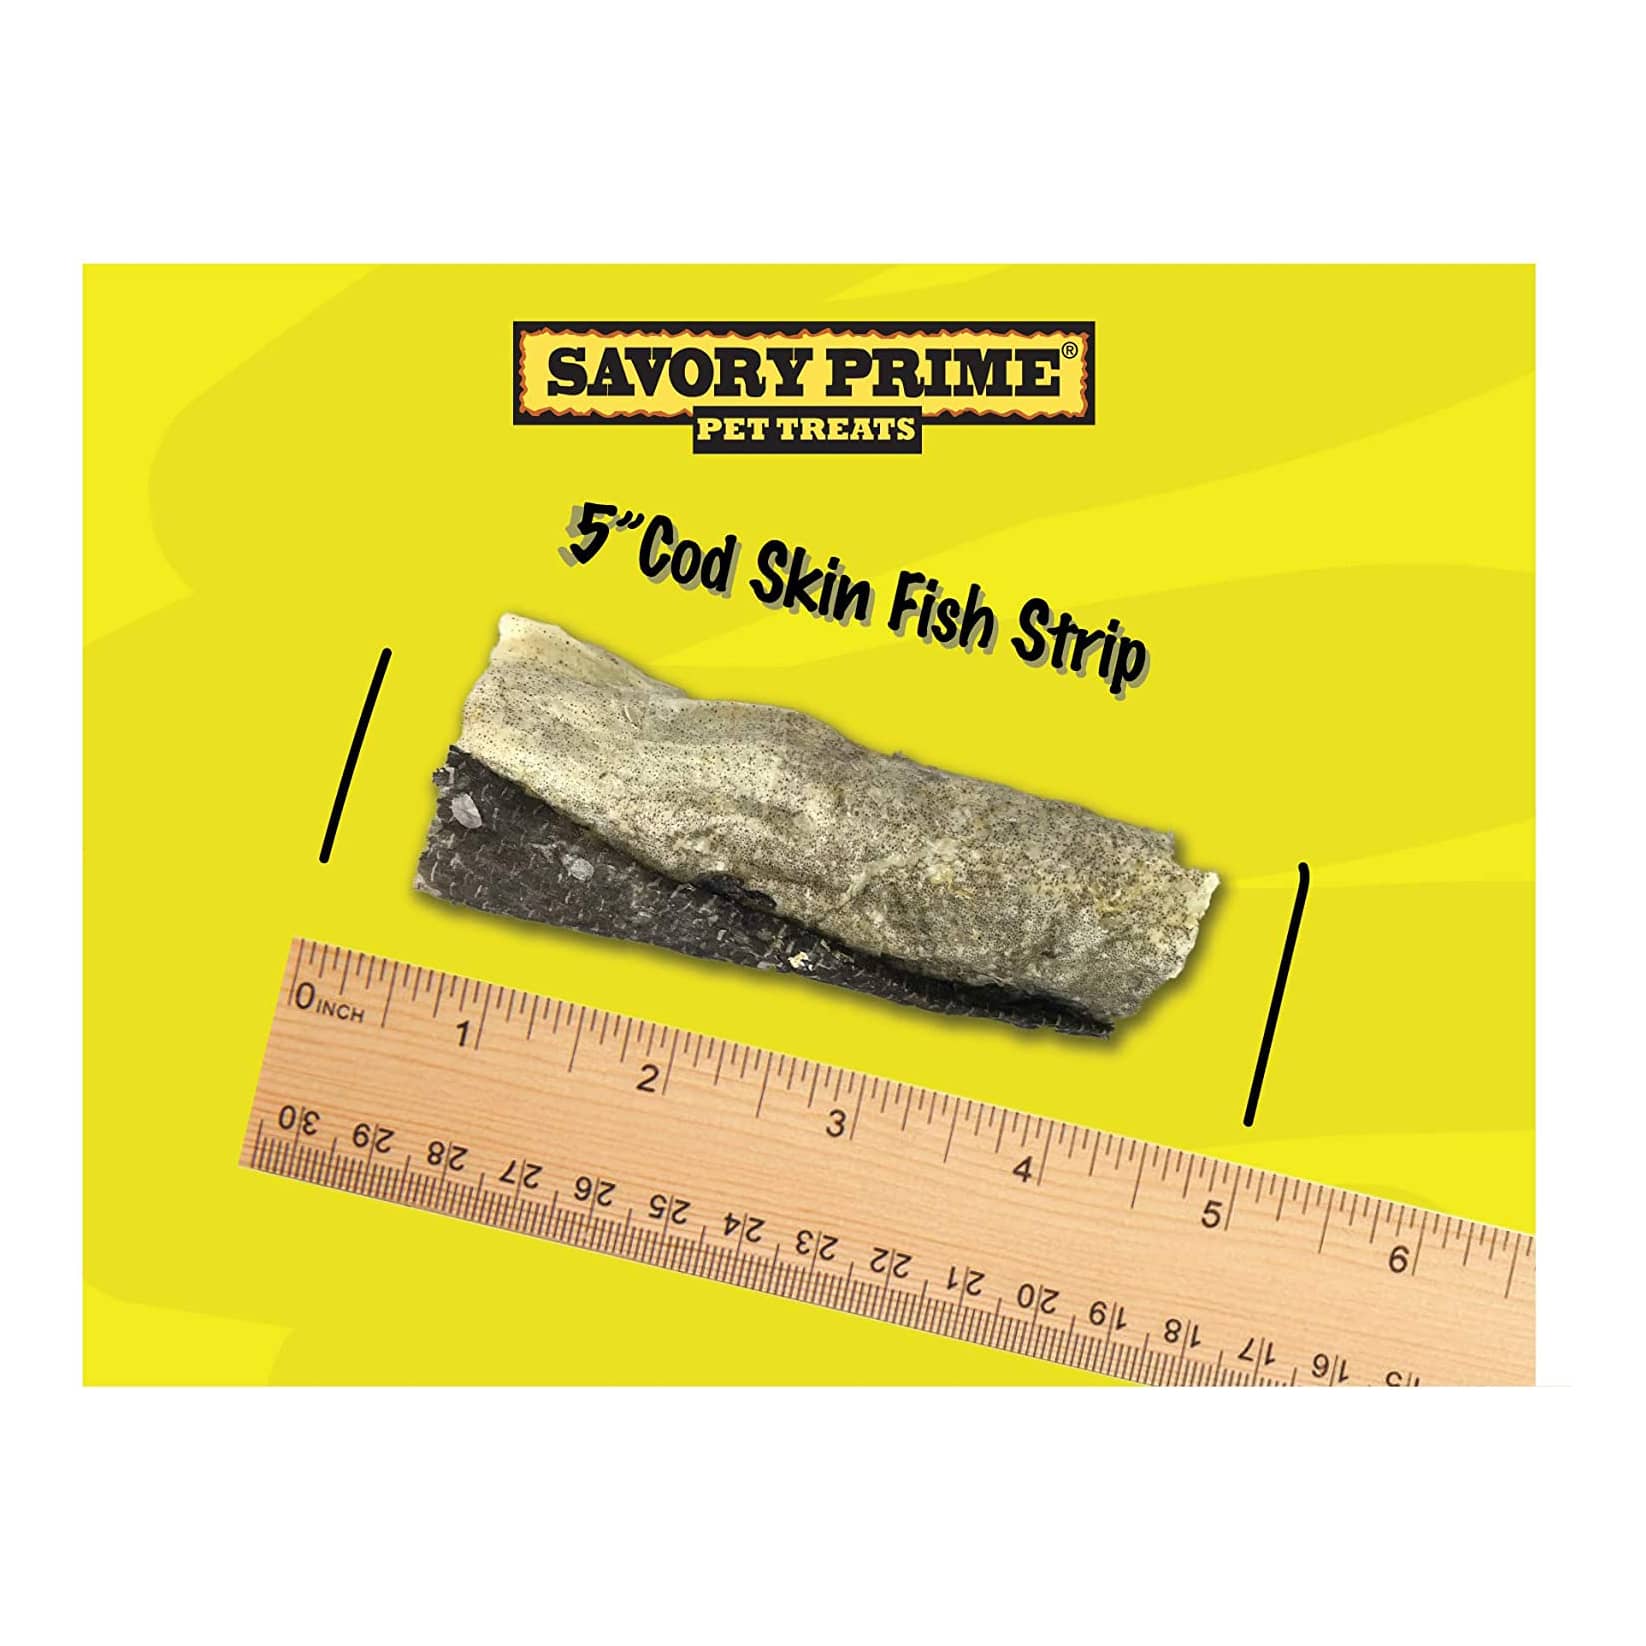 Savory Prime® Cod Skin Fish Strips - 4 oz.